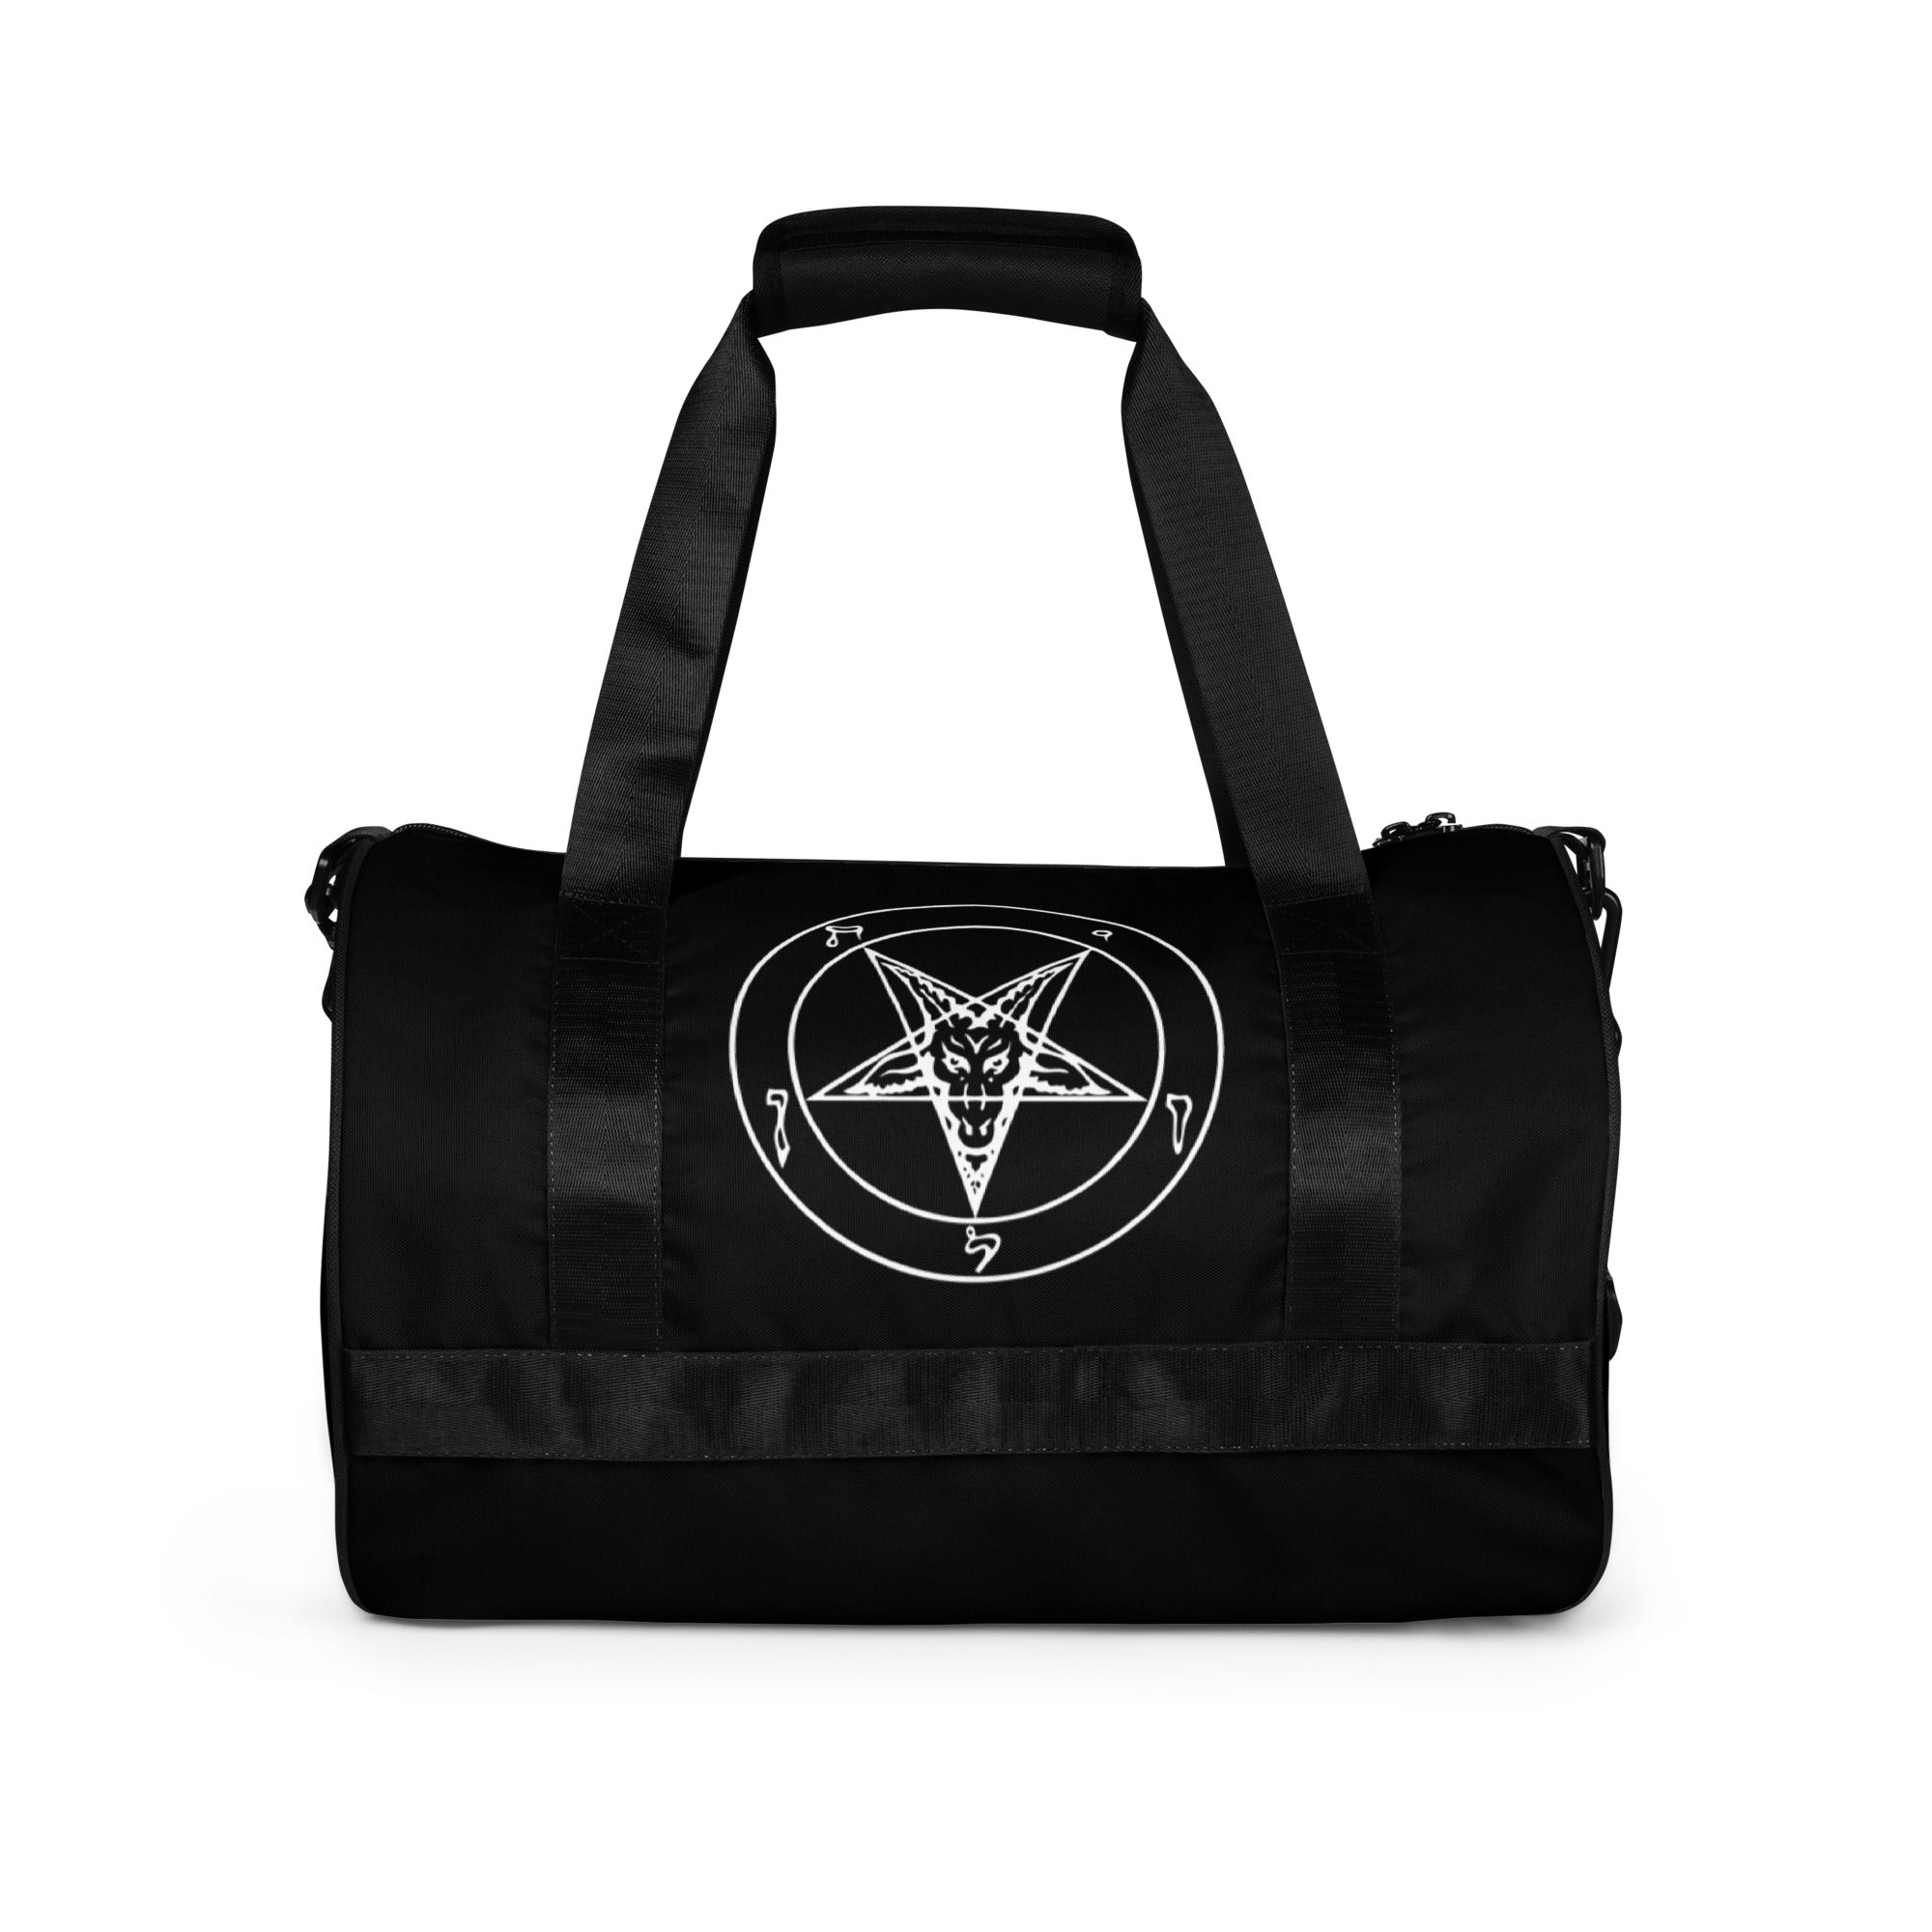 Hail Satan! Sigil of Baphomet Symbol on Black Gym Bag / Duffle Bag - Edge of Life Designs